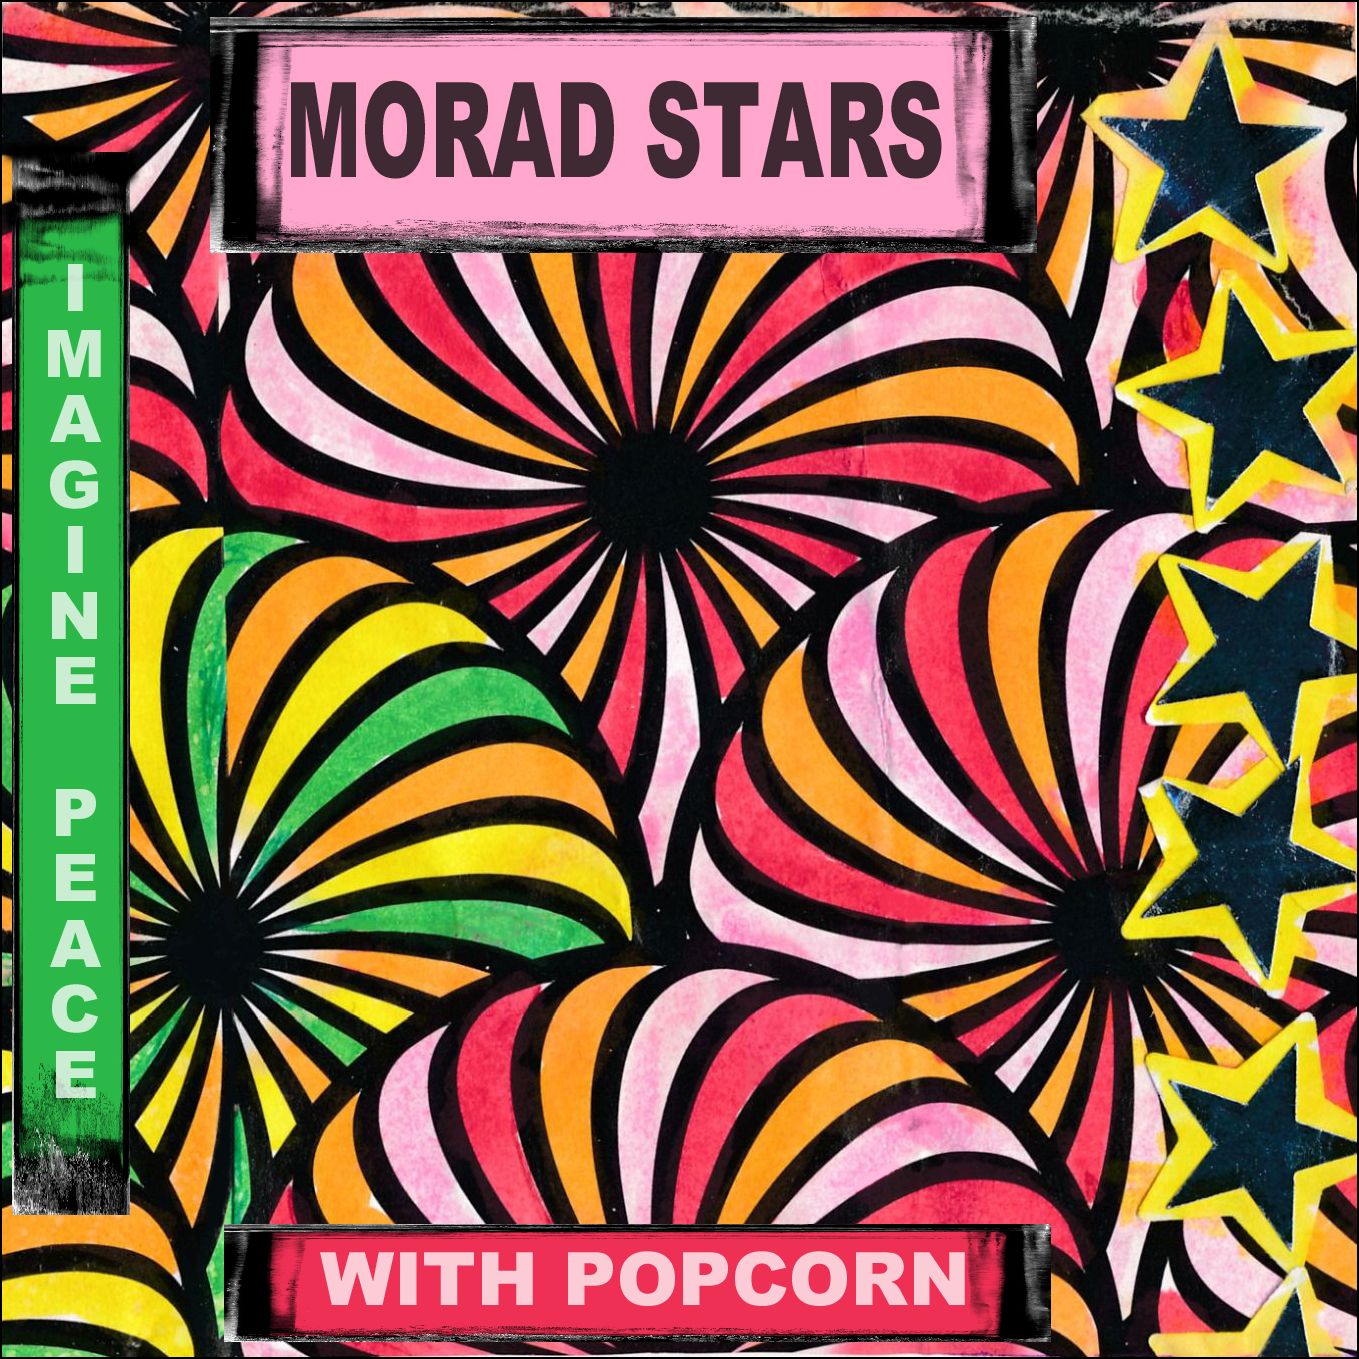 Morad Stars - Popcorn